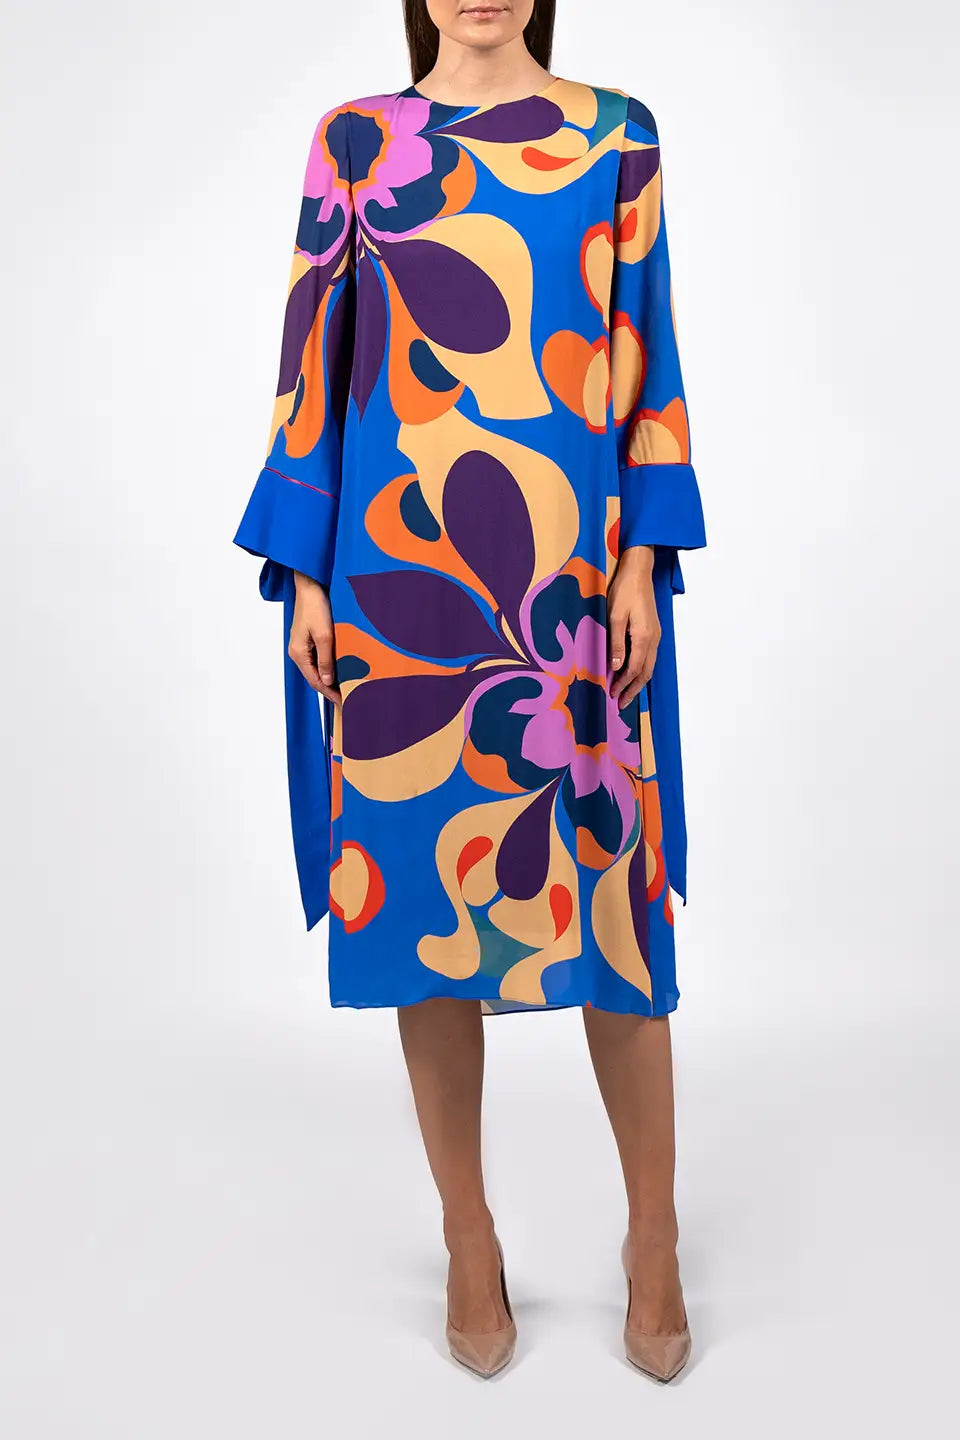 Shop online trendy Blue Maxi dresses from Borgo de Nor Fashion designer. Product gallery 1